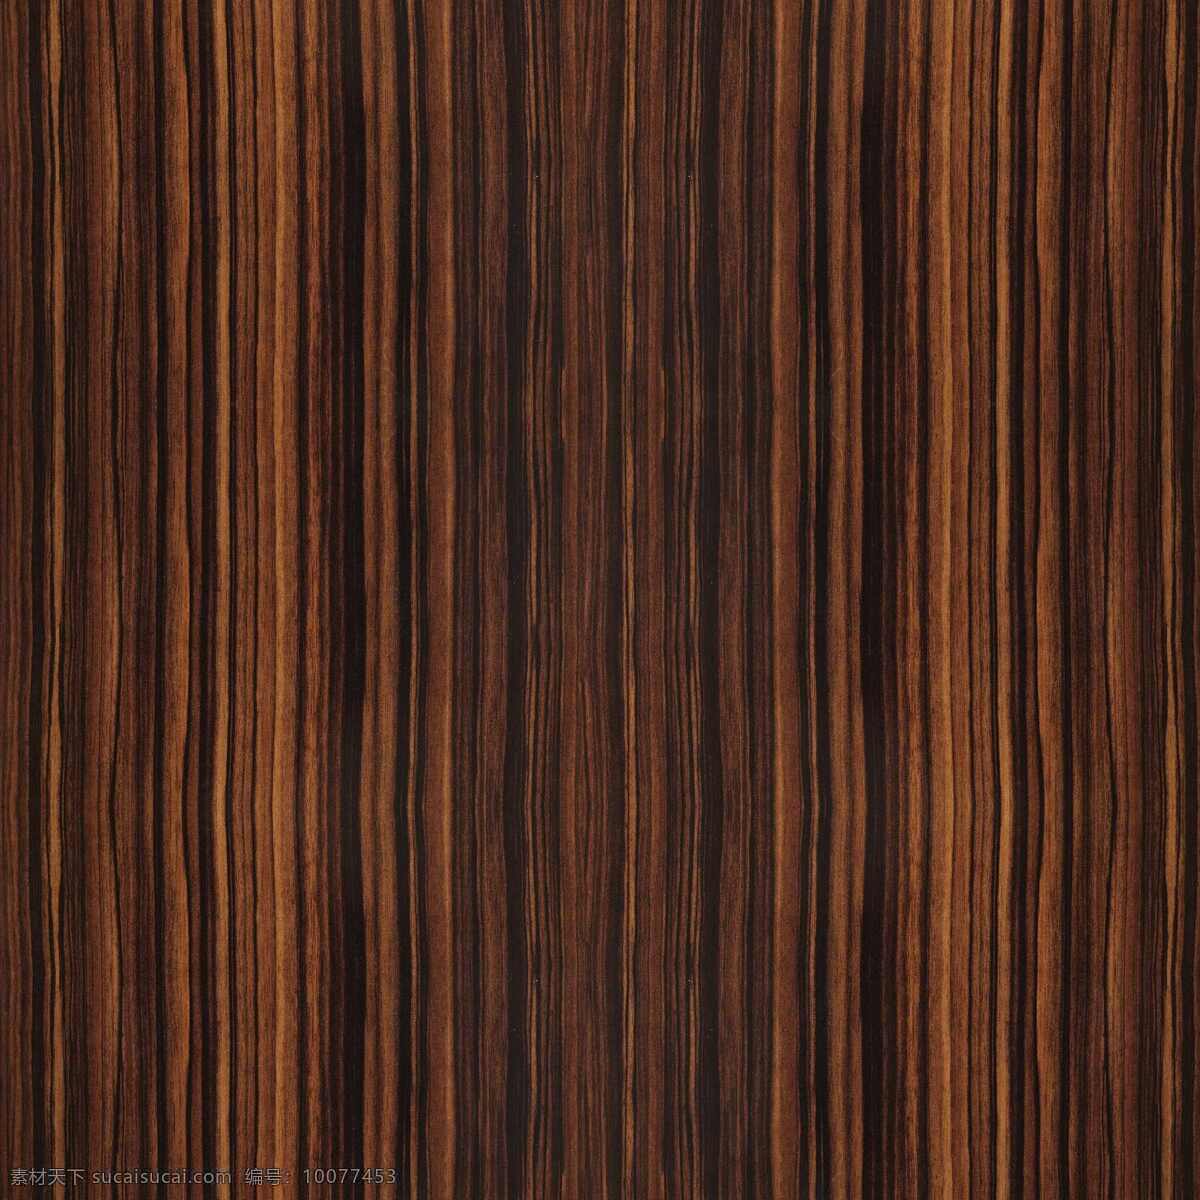 vray 木纹 材质 max9 光滑 木材 有贴图 抛光 直纹 3d模型素材 材质贴图